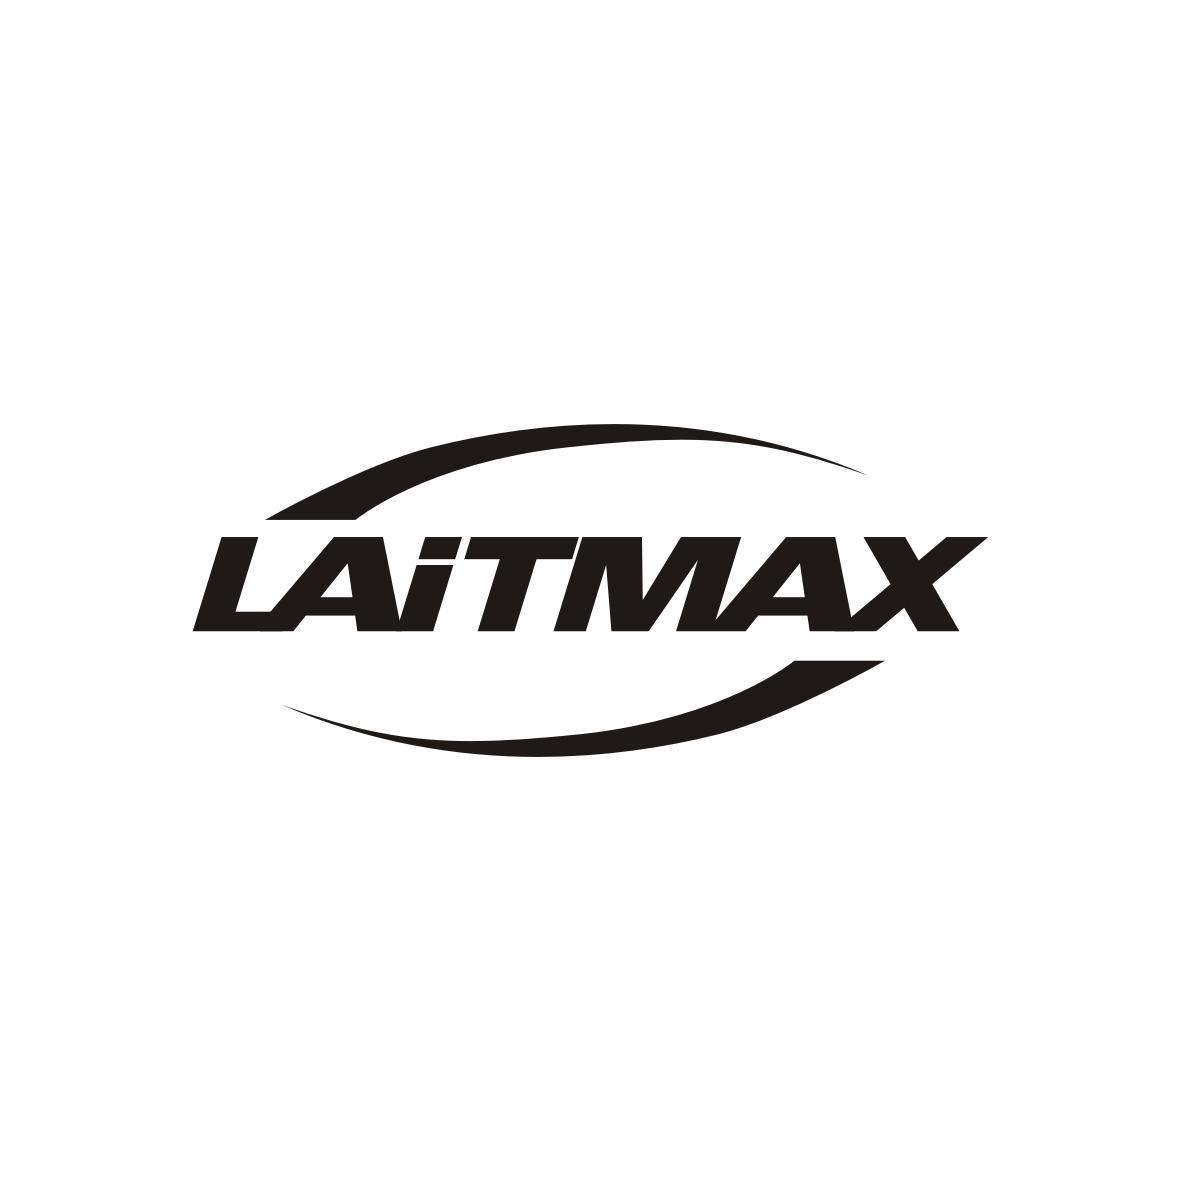 LAITMAX商标转让